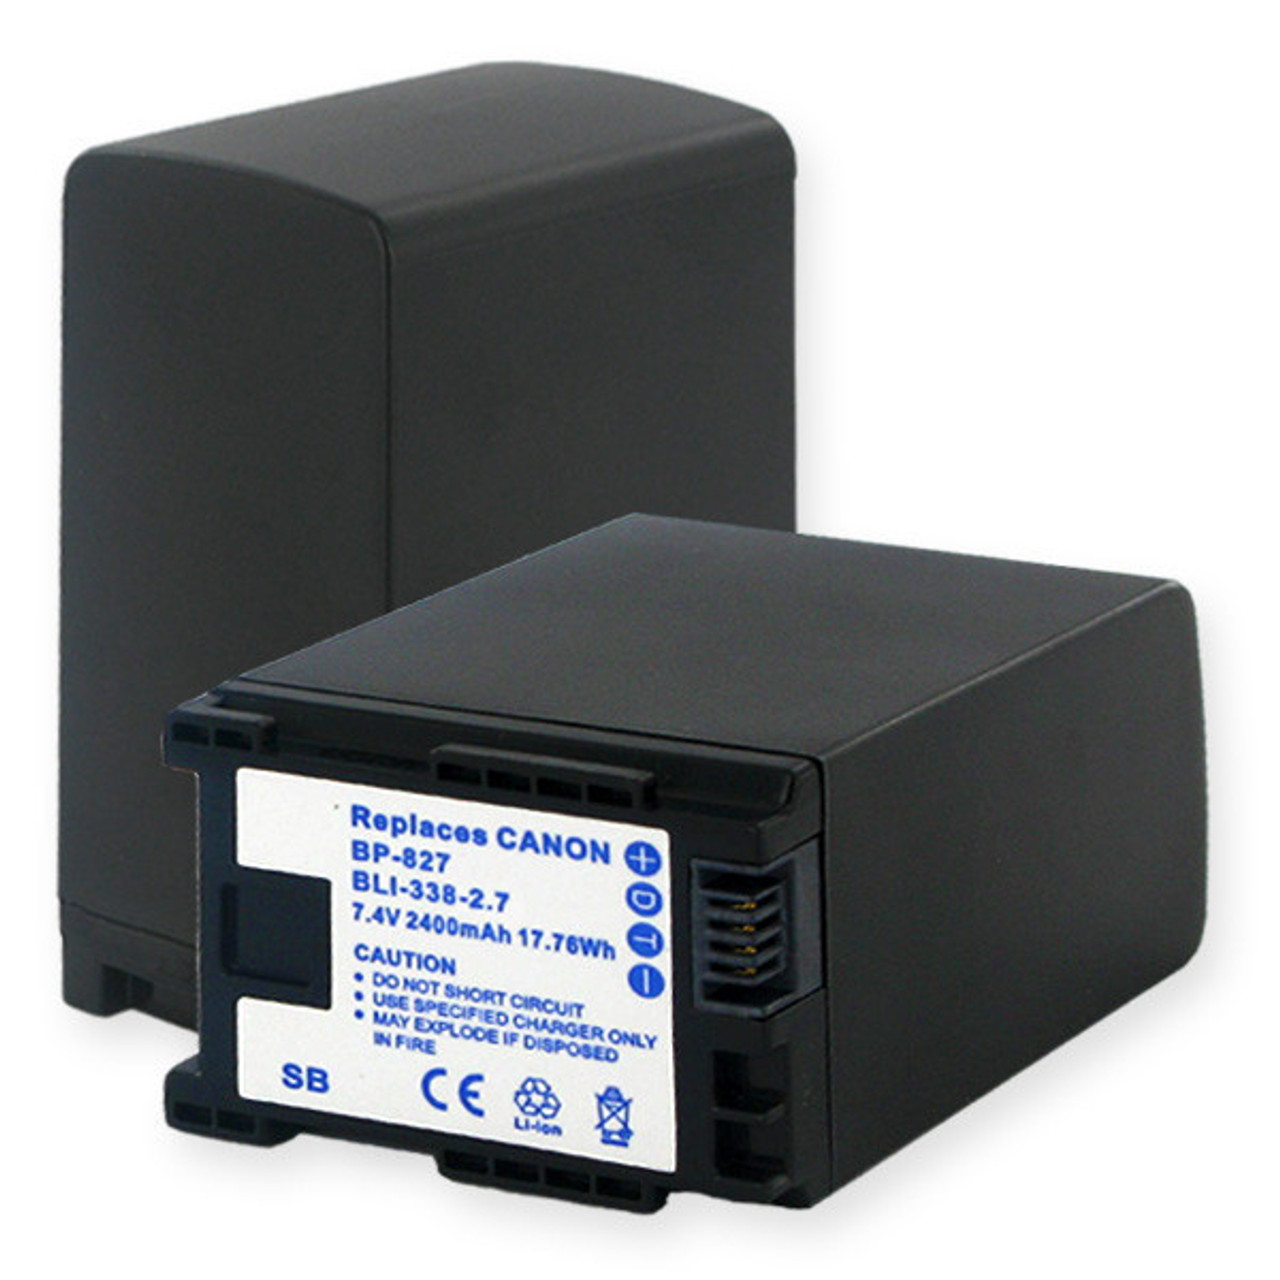 CANON BP-827 7.4V 2400MAH Video Battery